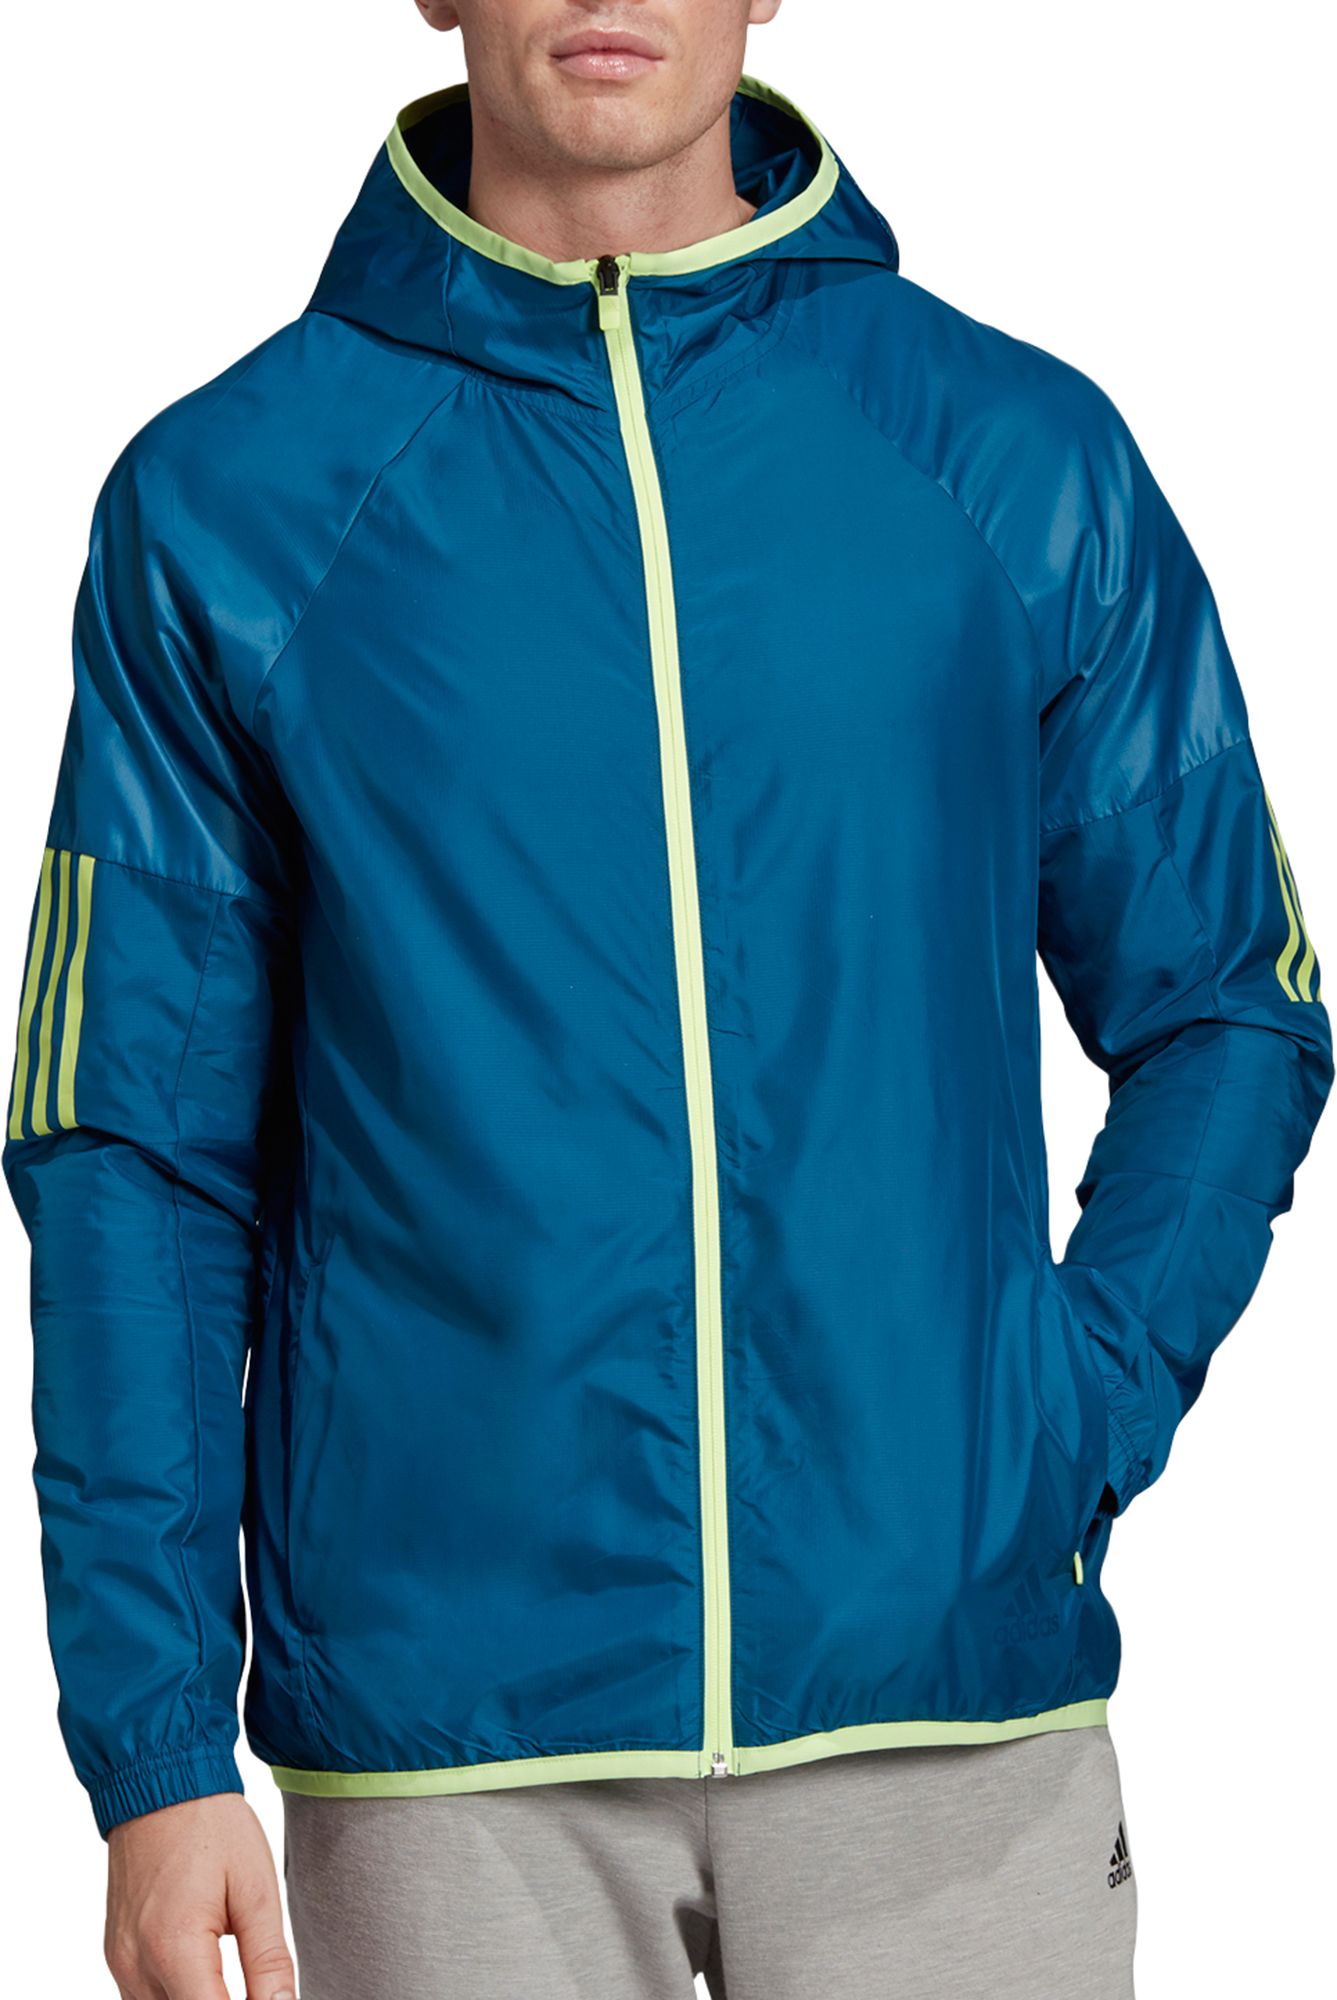 adidas windbreaker 2 jacket